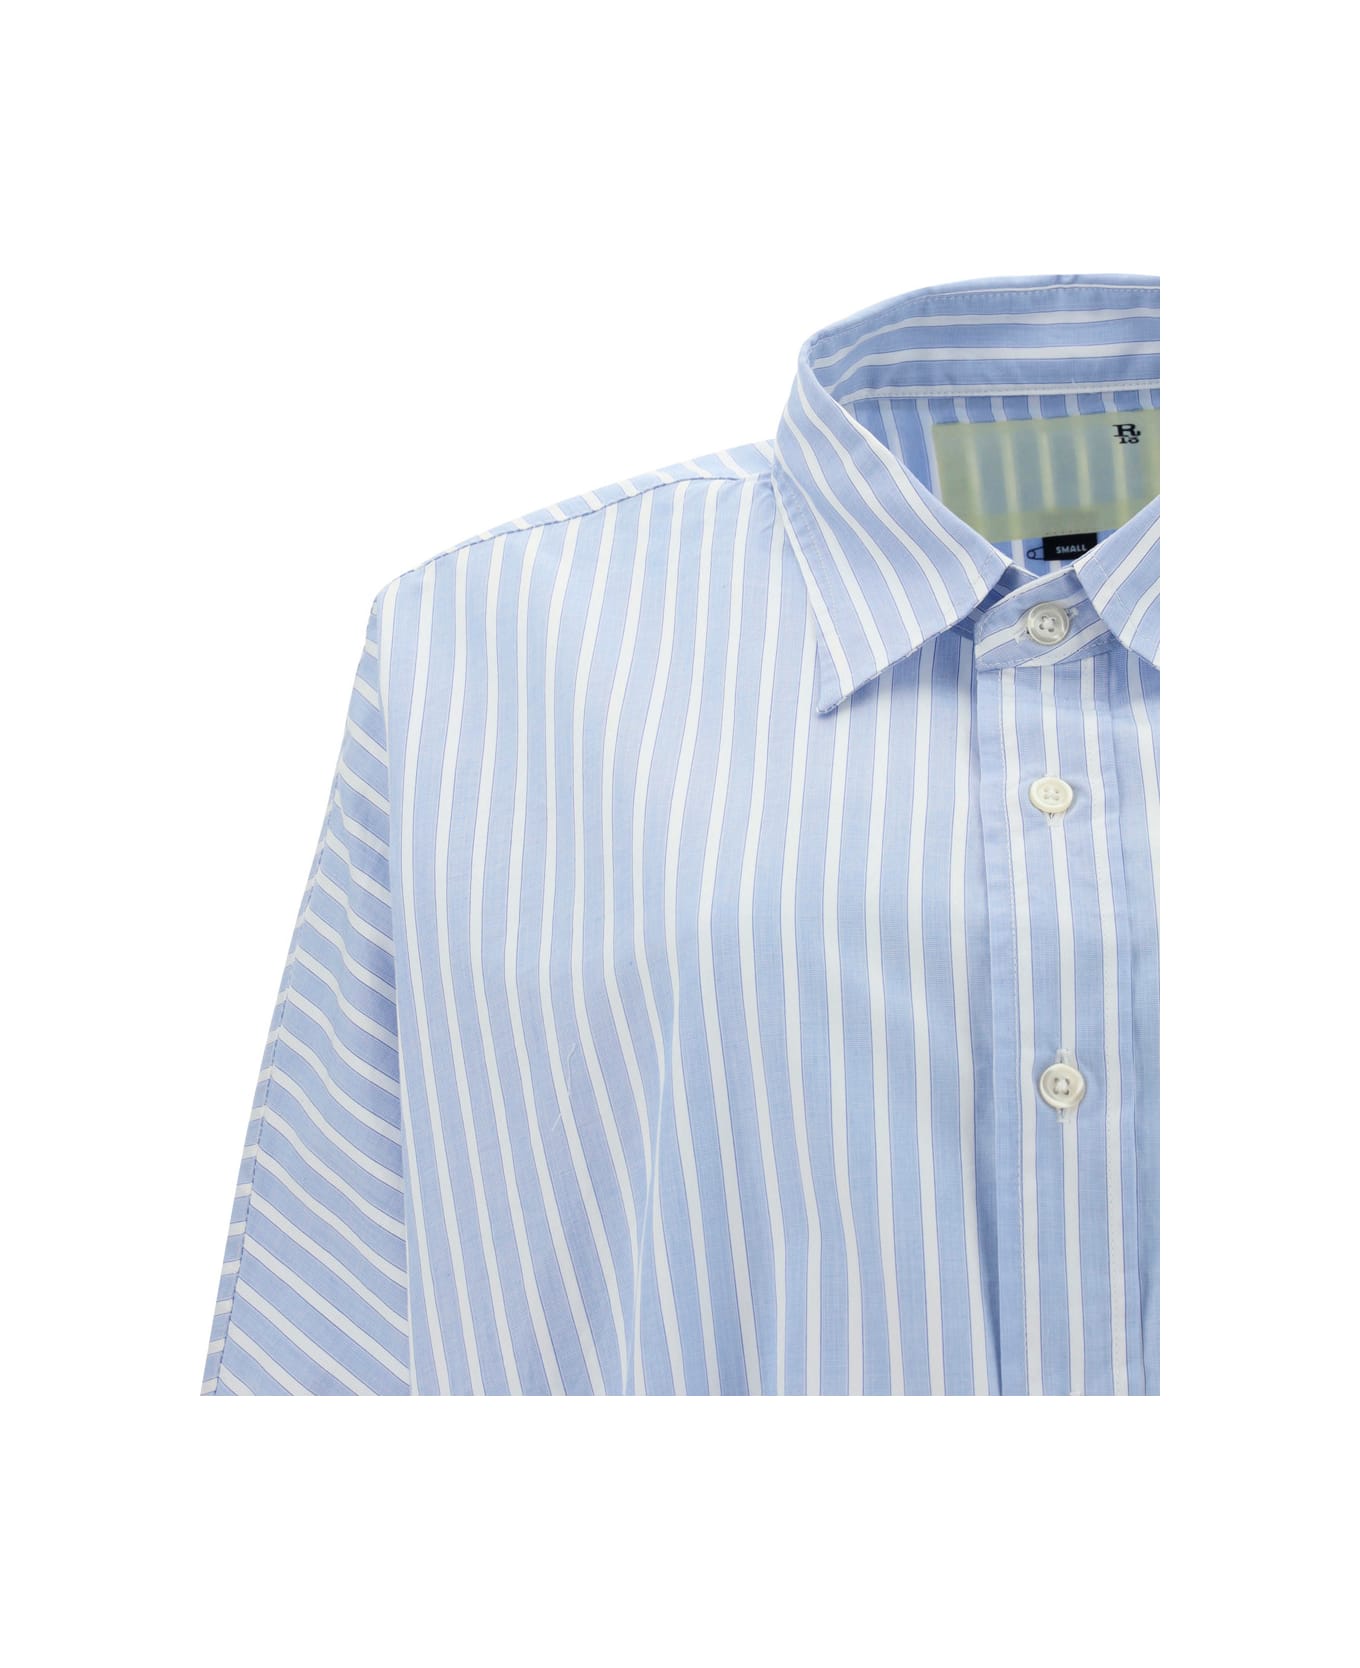 R13 Oversize Shirt - Brioni plain polo shirt